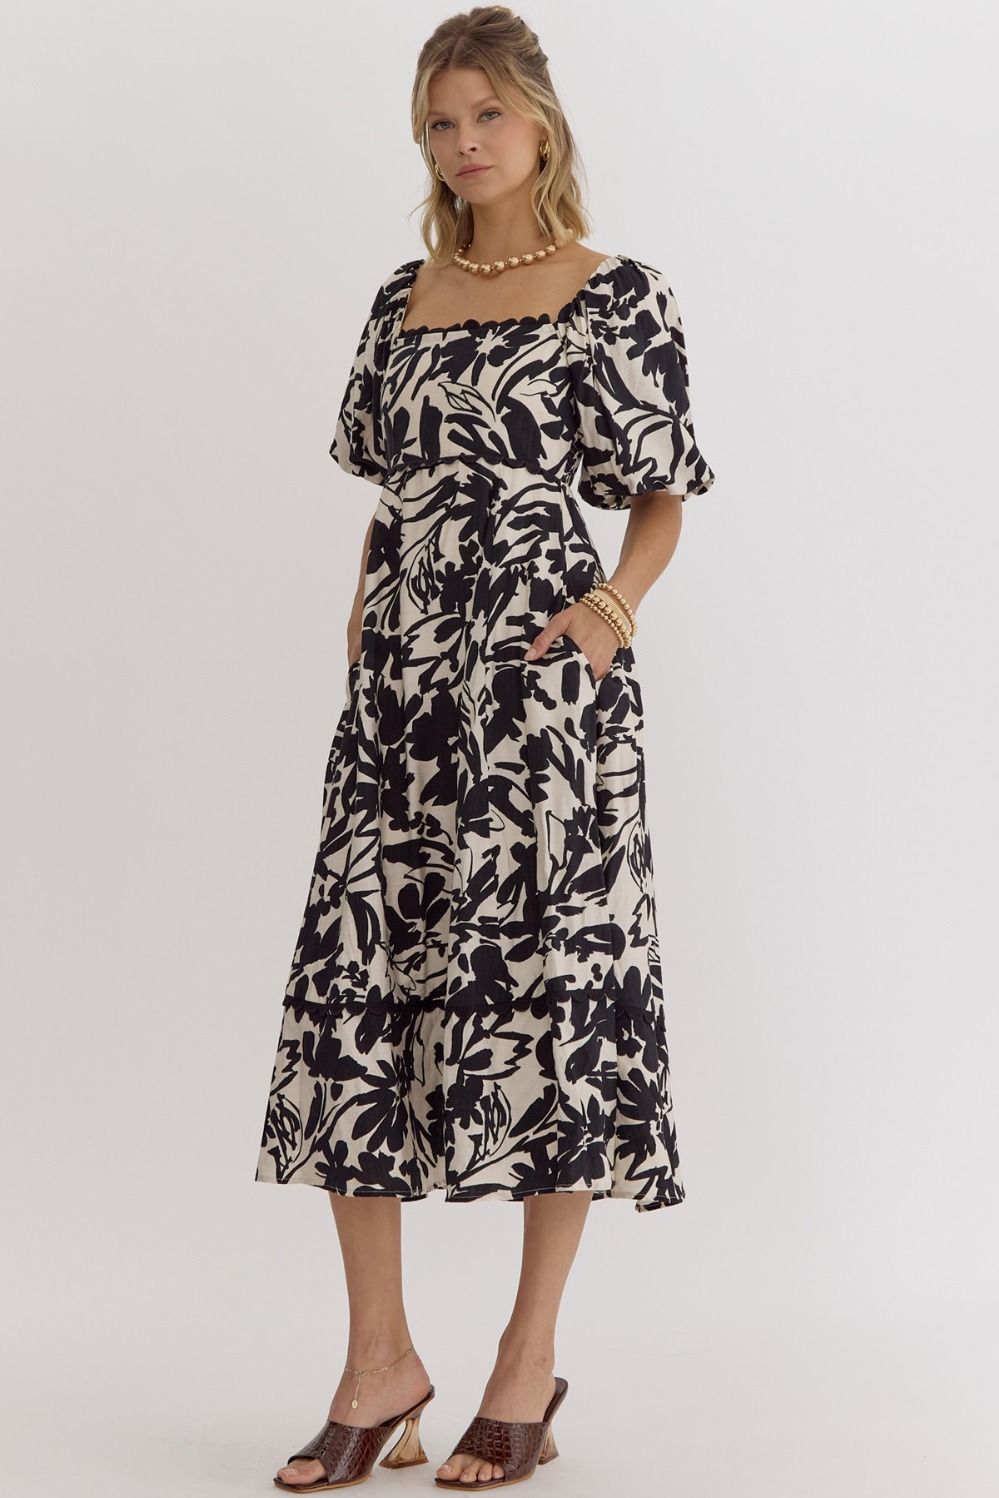 ENTRO INC Women's Dresses Floral Print Square Neck Bubble Sleeve Midi Dress || David's Clothing